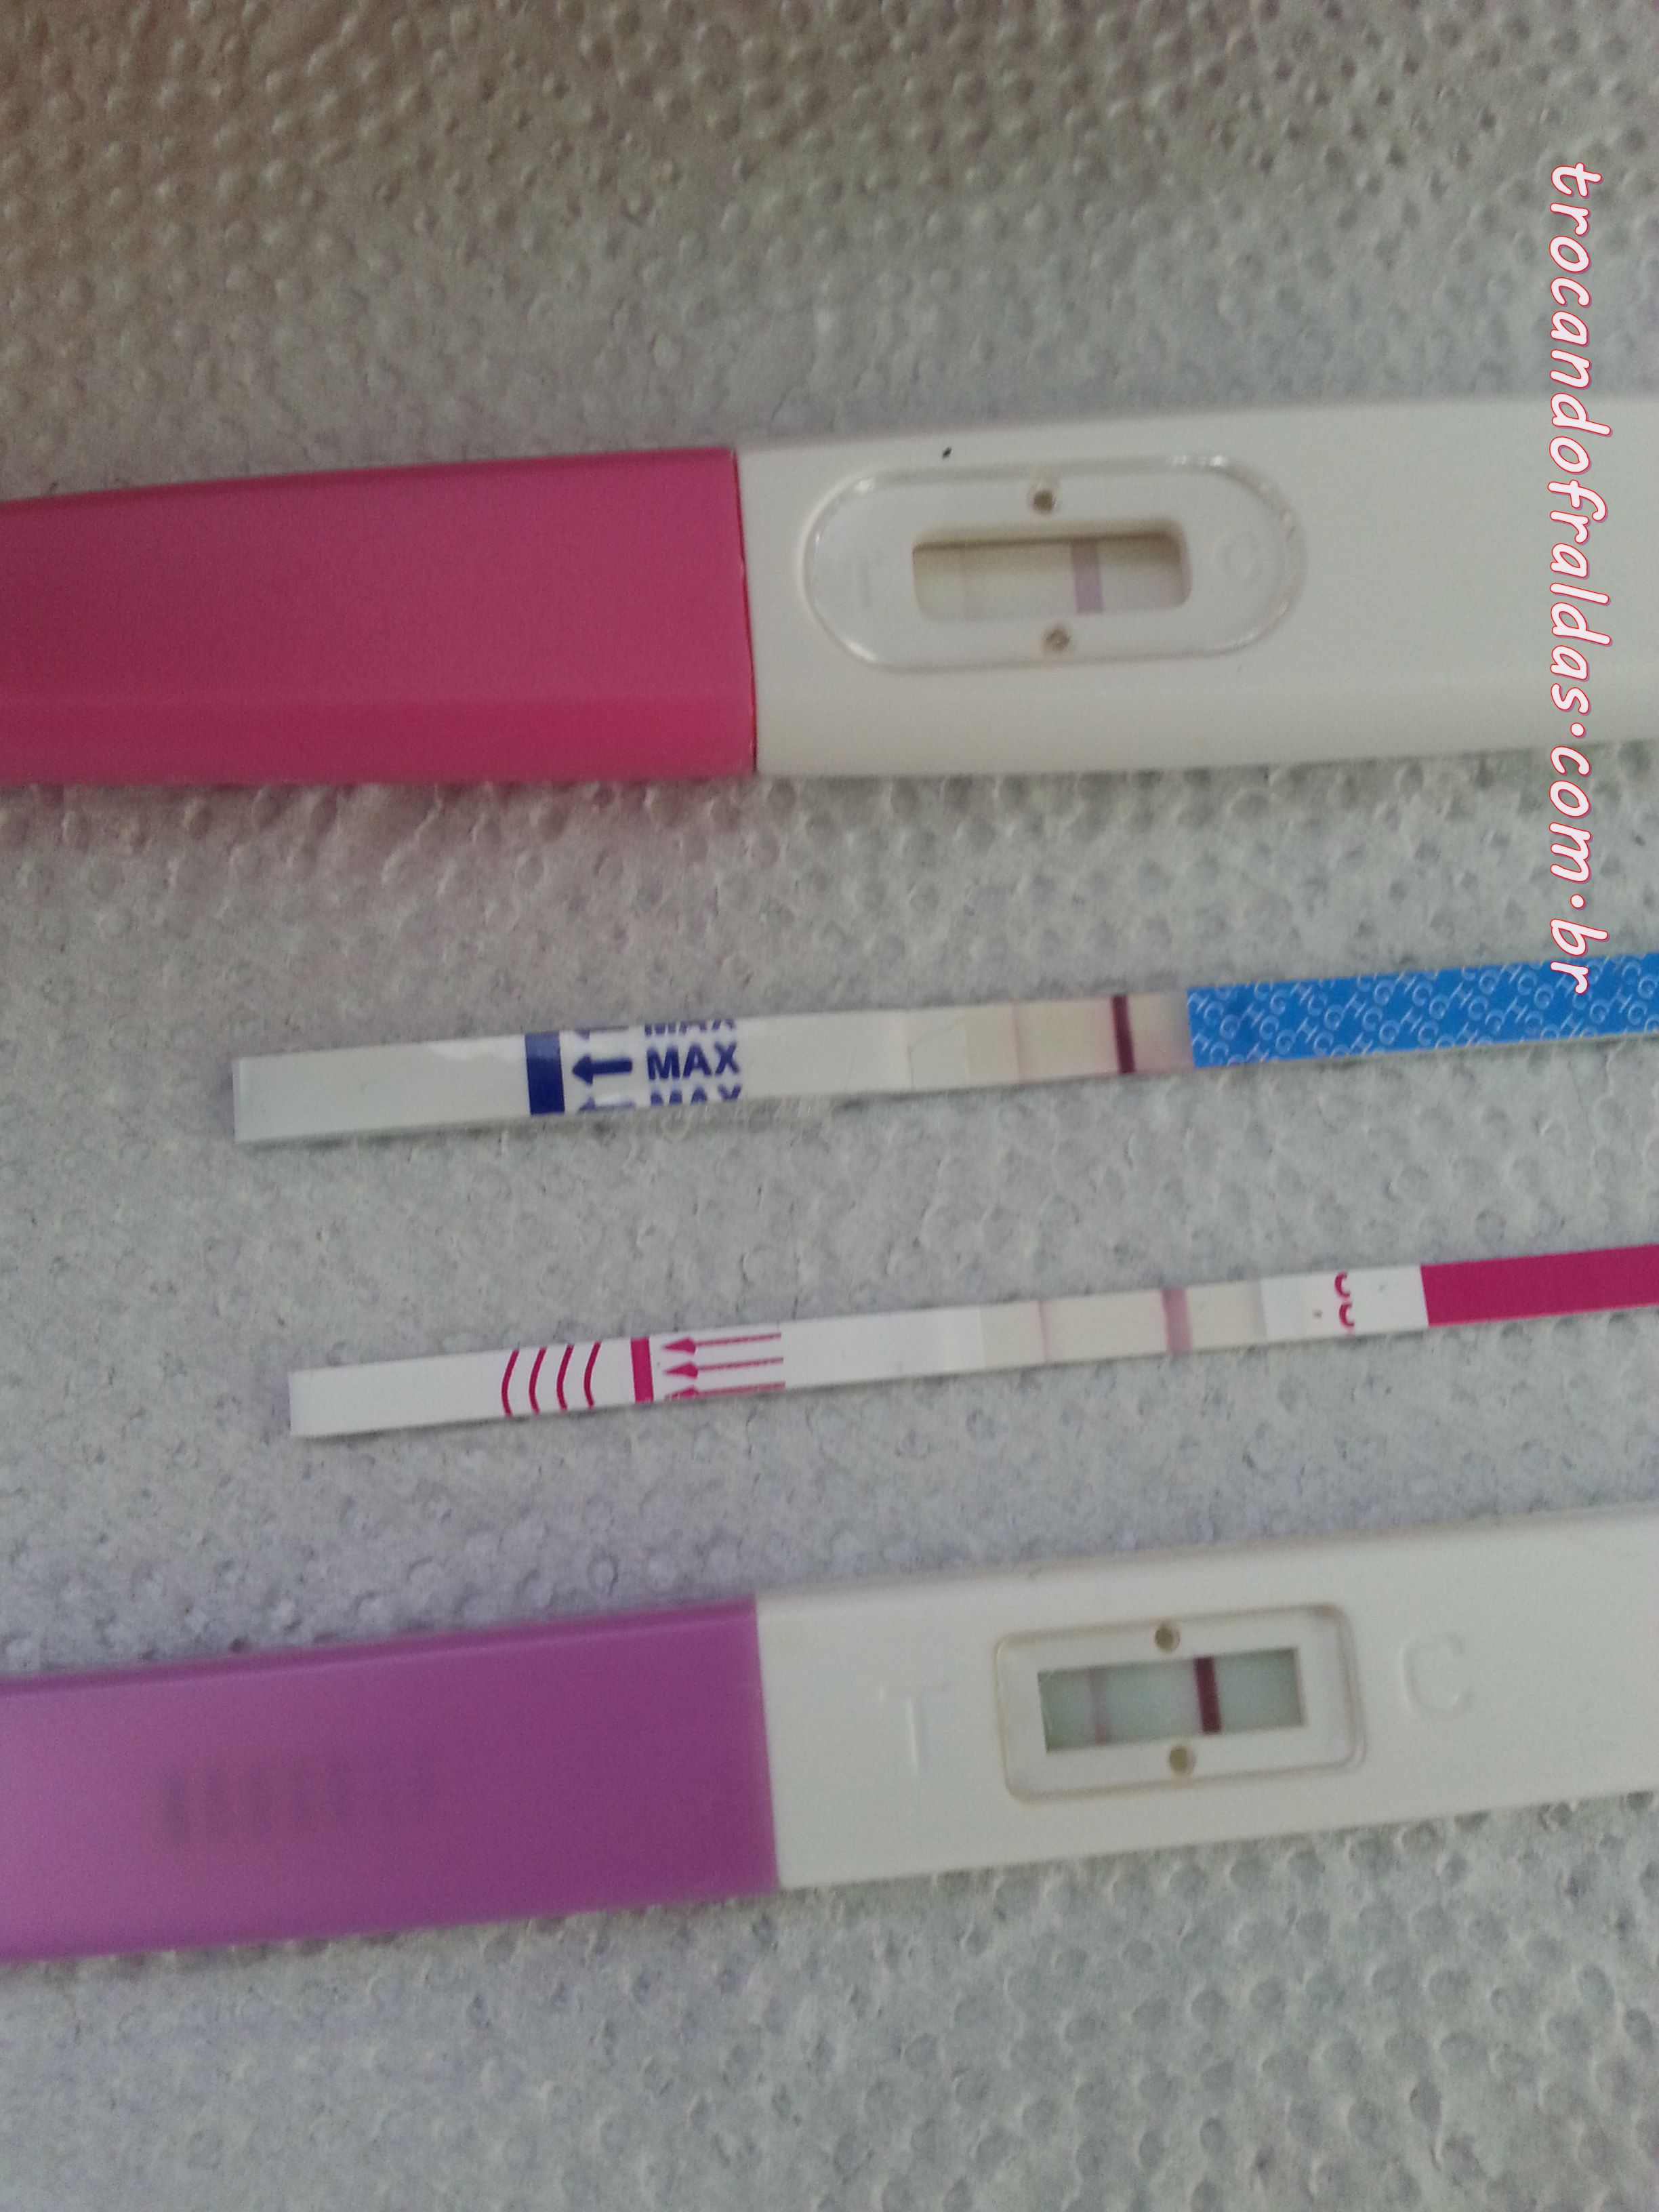 Como saber se o exame de gravidez é positivo Teste De Gravidez Positivo Galeria De Fotos Trocandofraldas Com Br